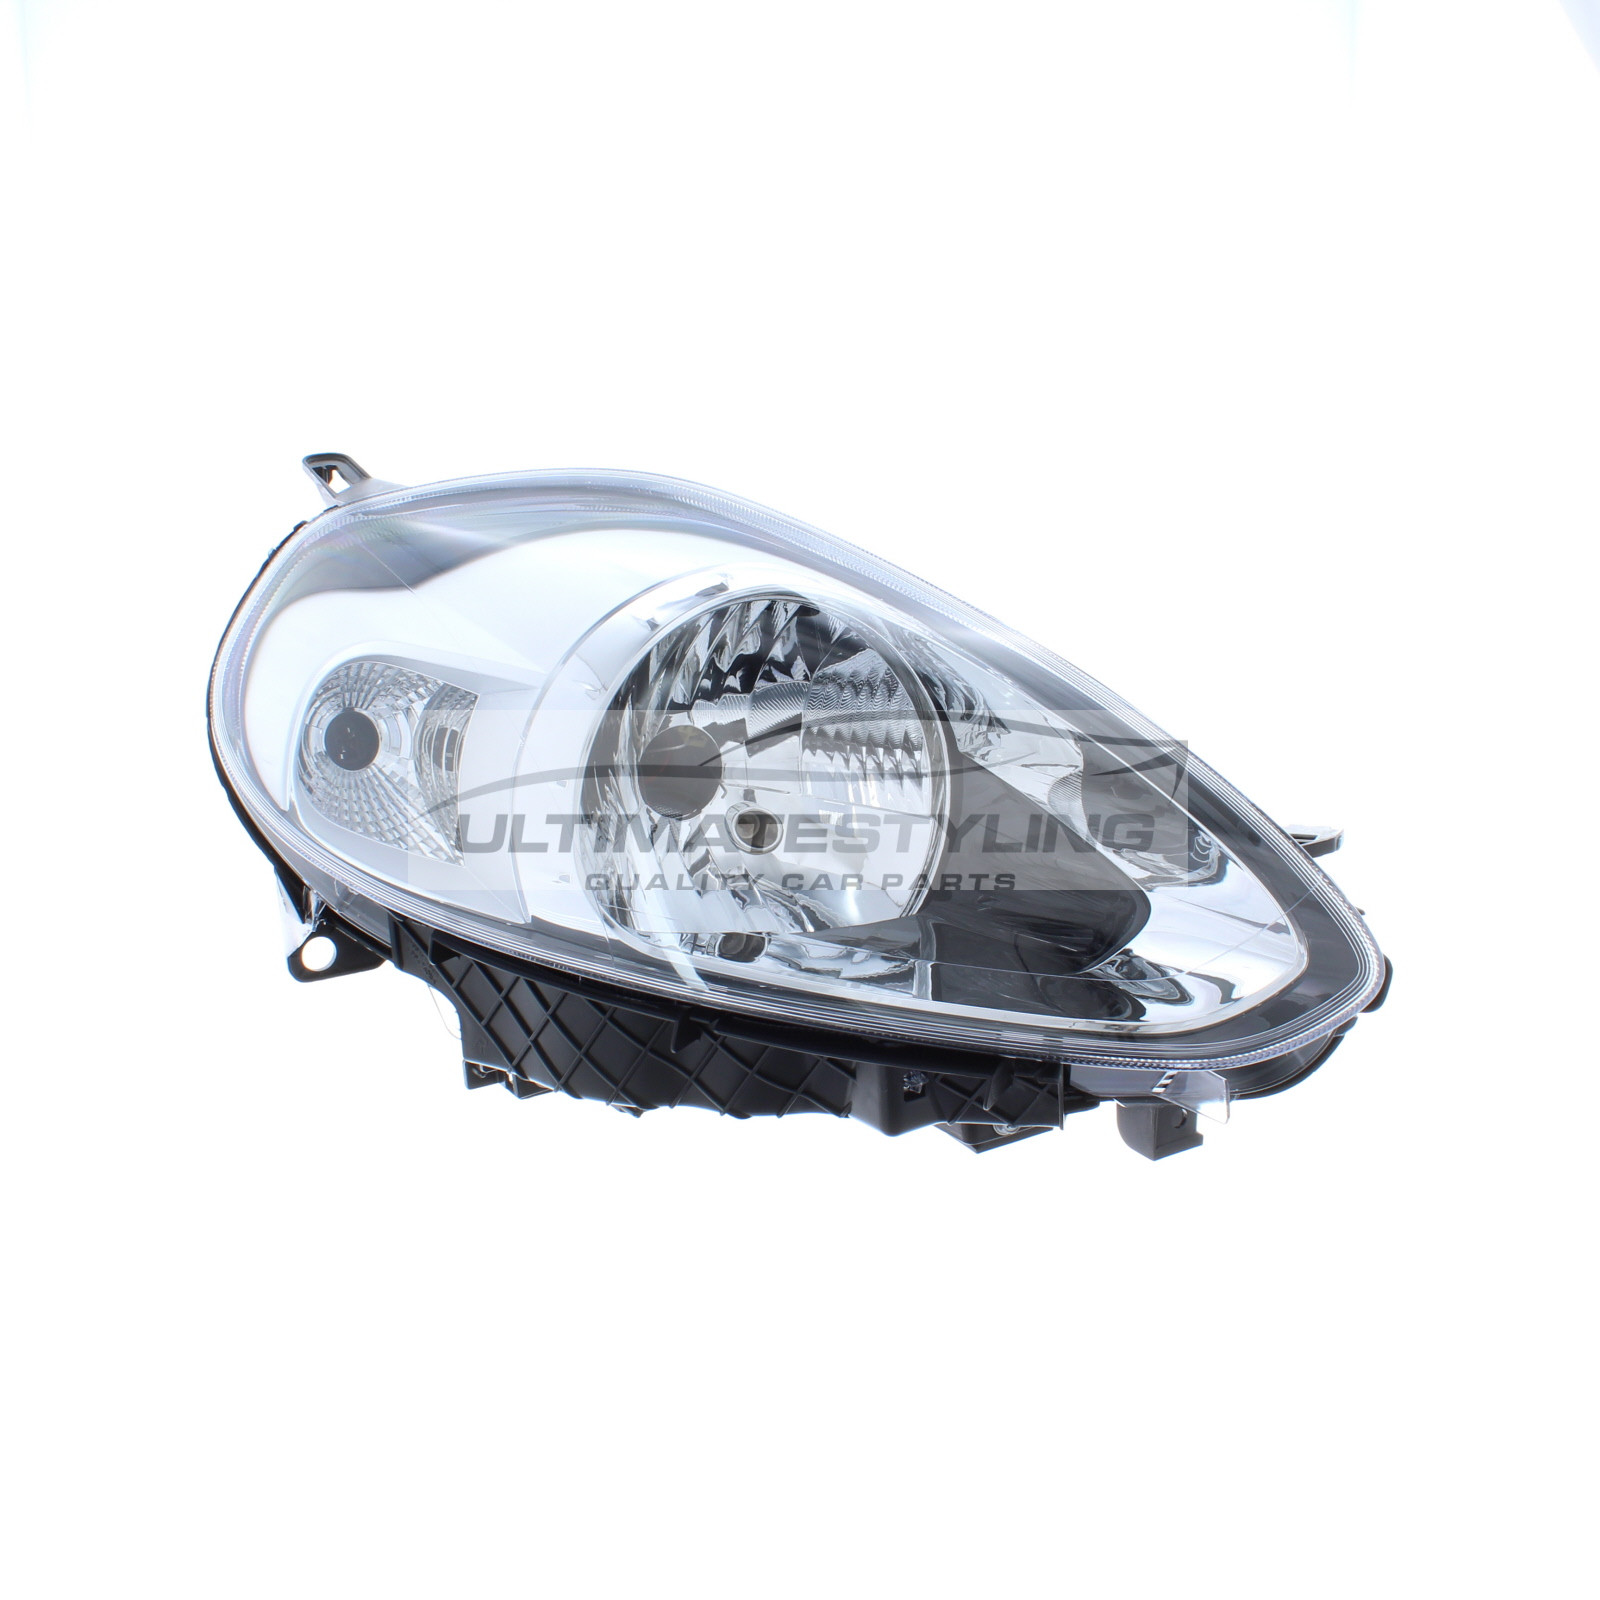 Headlight / Headlamp for Fiat Punto